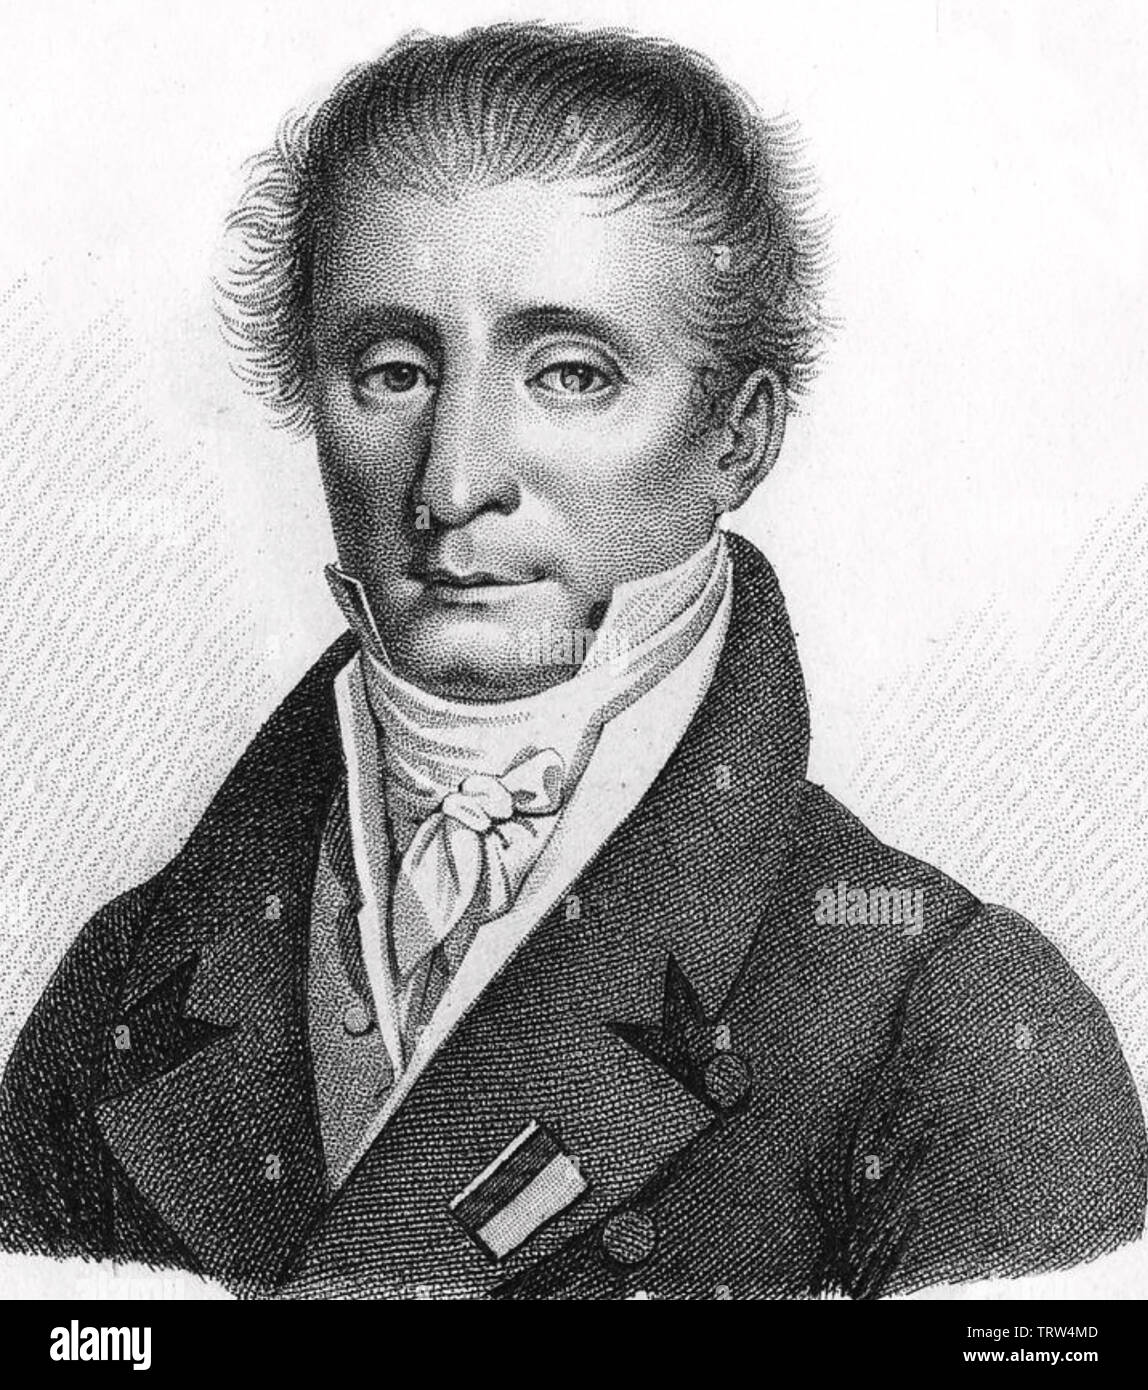 AMBROISE TARDIEU (1788-1841) cartografo francese Foto Stock